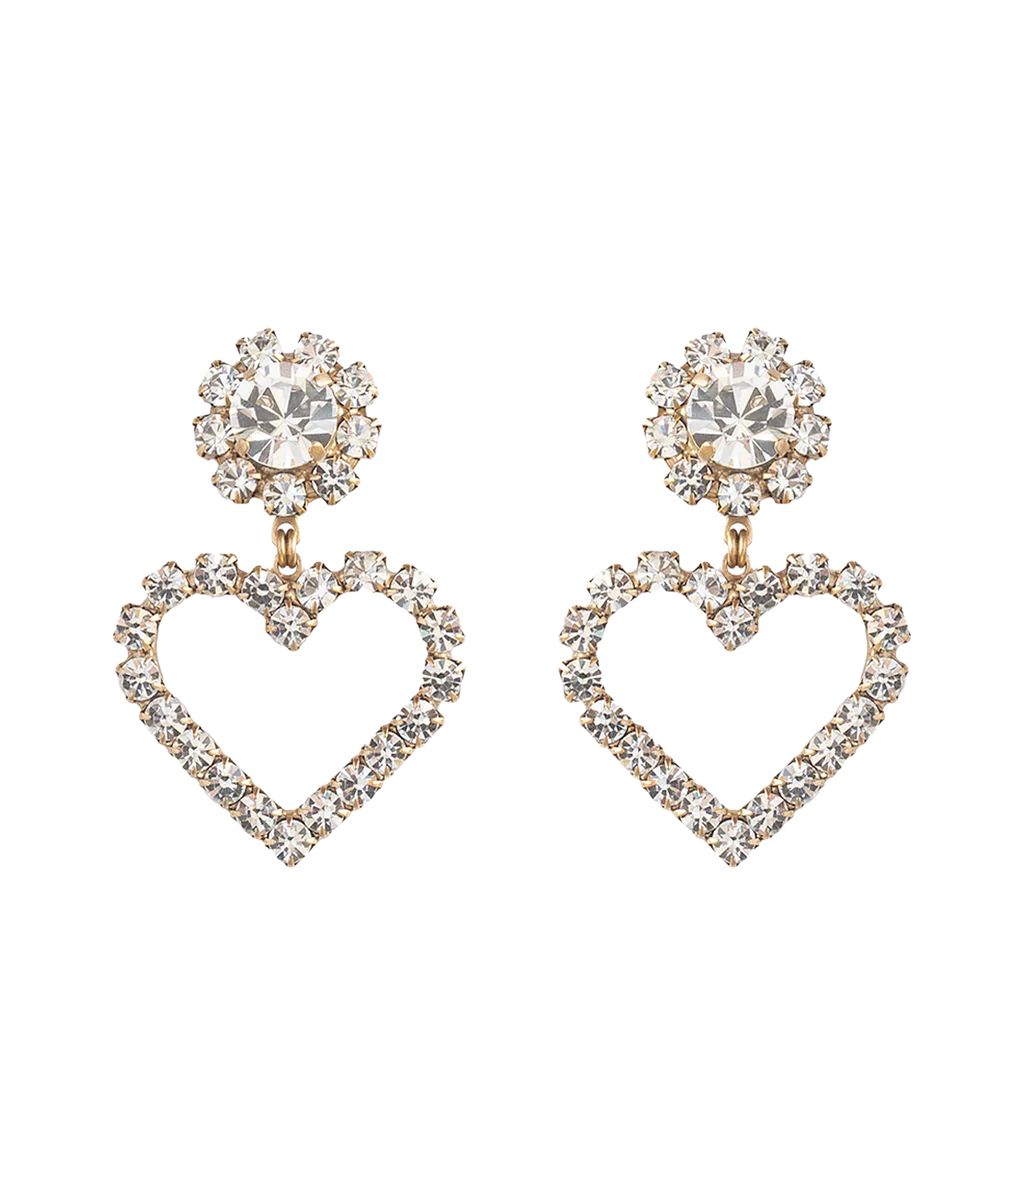 Cupid Heart Earrings | Loren Hope Designs